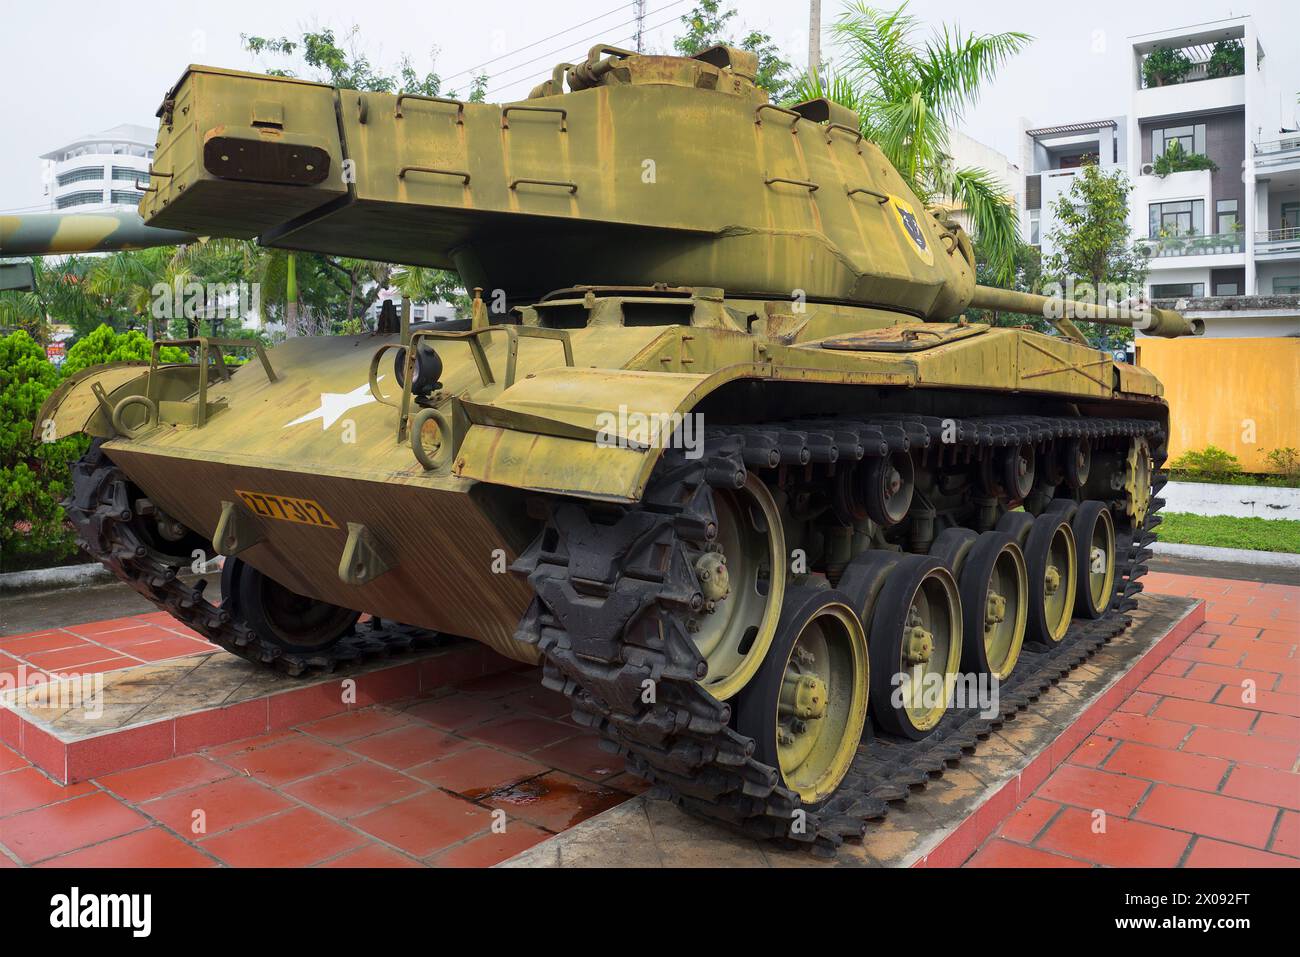 DANANG, VIETNAM - JANUARY 06, 2016: M41 Walker Bulldog light tank at the Museum of the 5th Militarized Zone Stock Photo